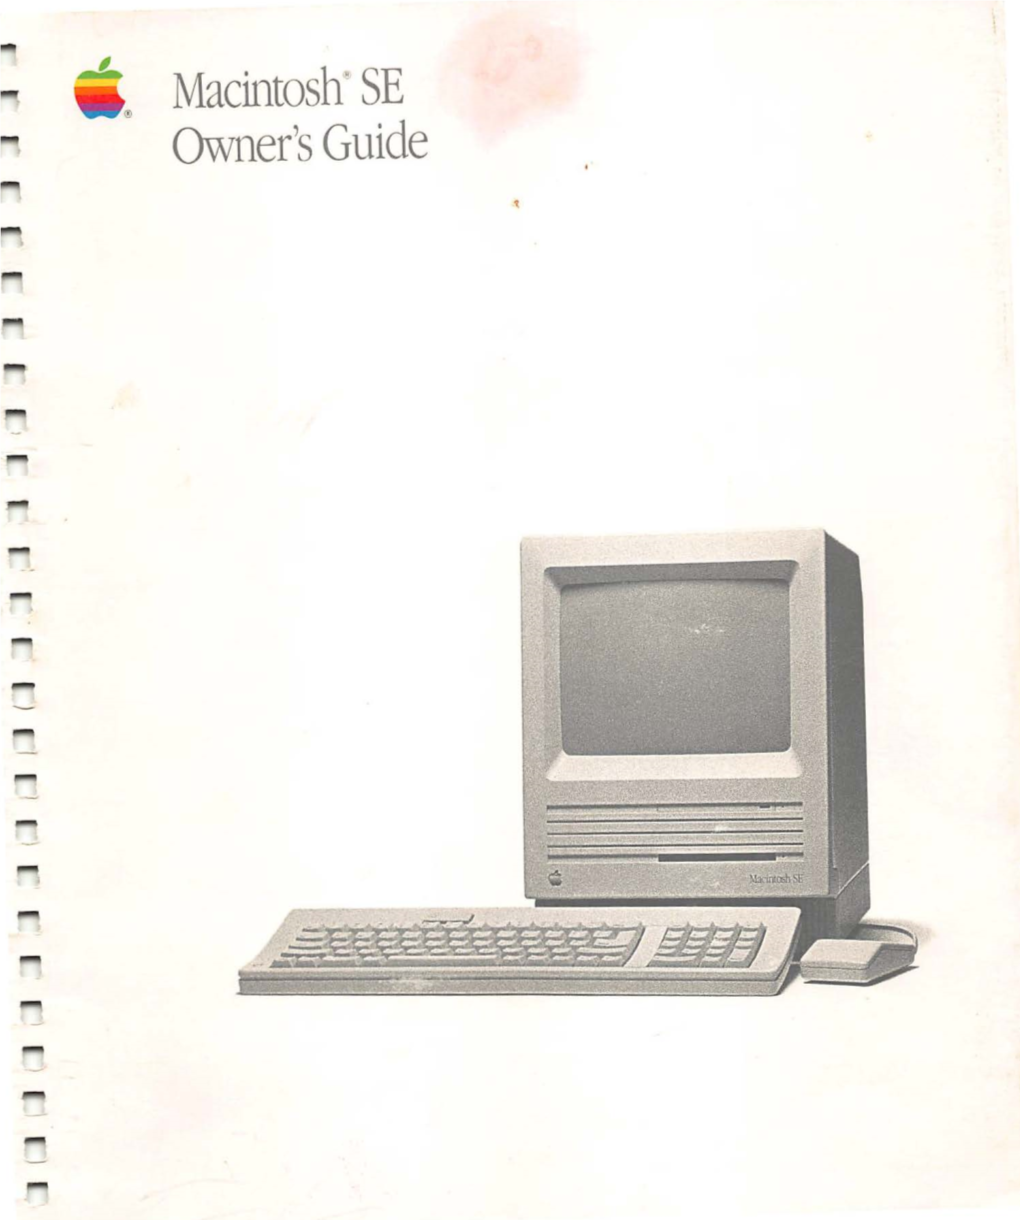 Macintosh SE Owners Guide 1988.Pdf